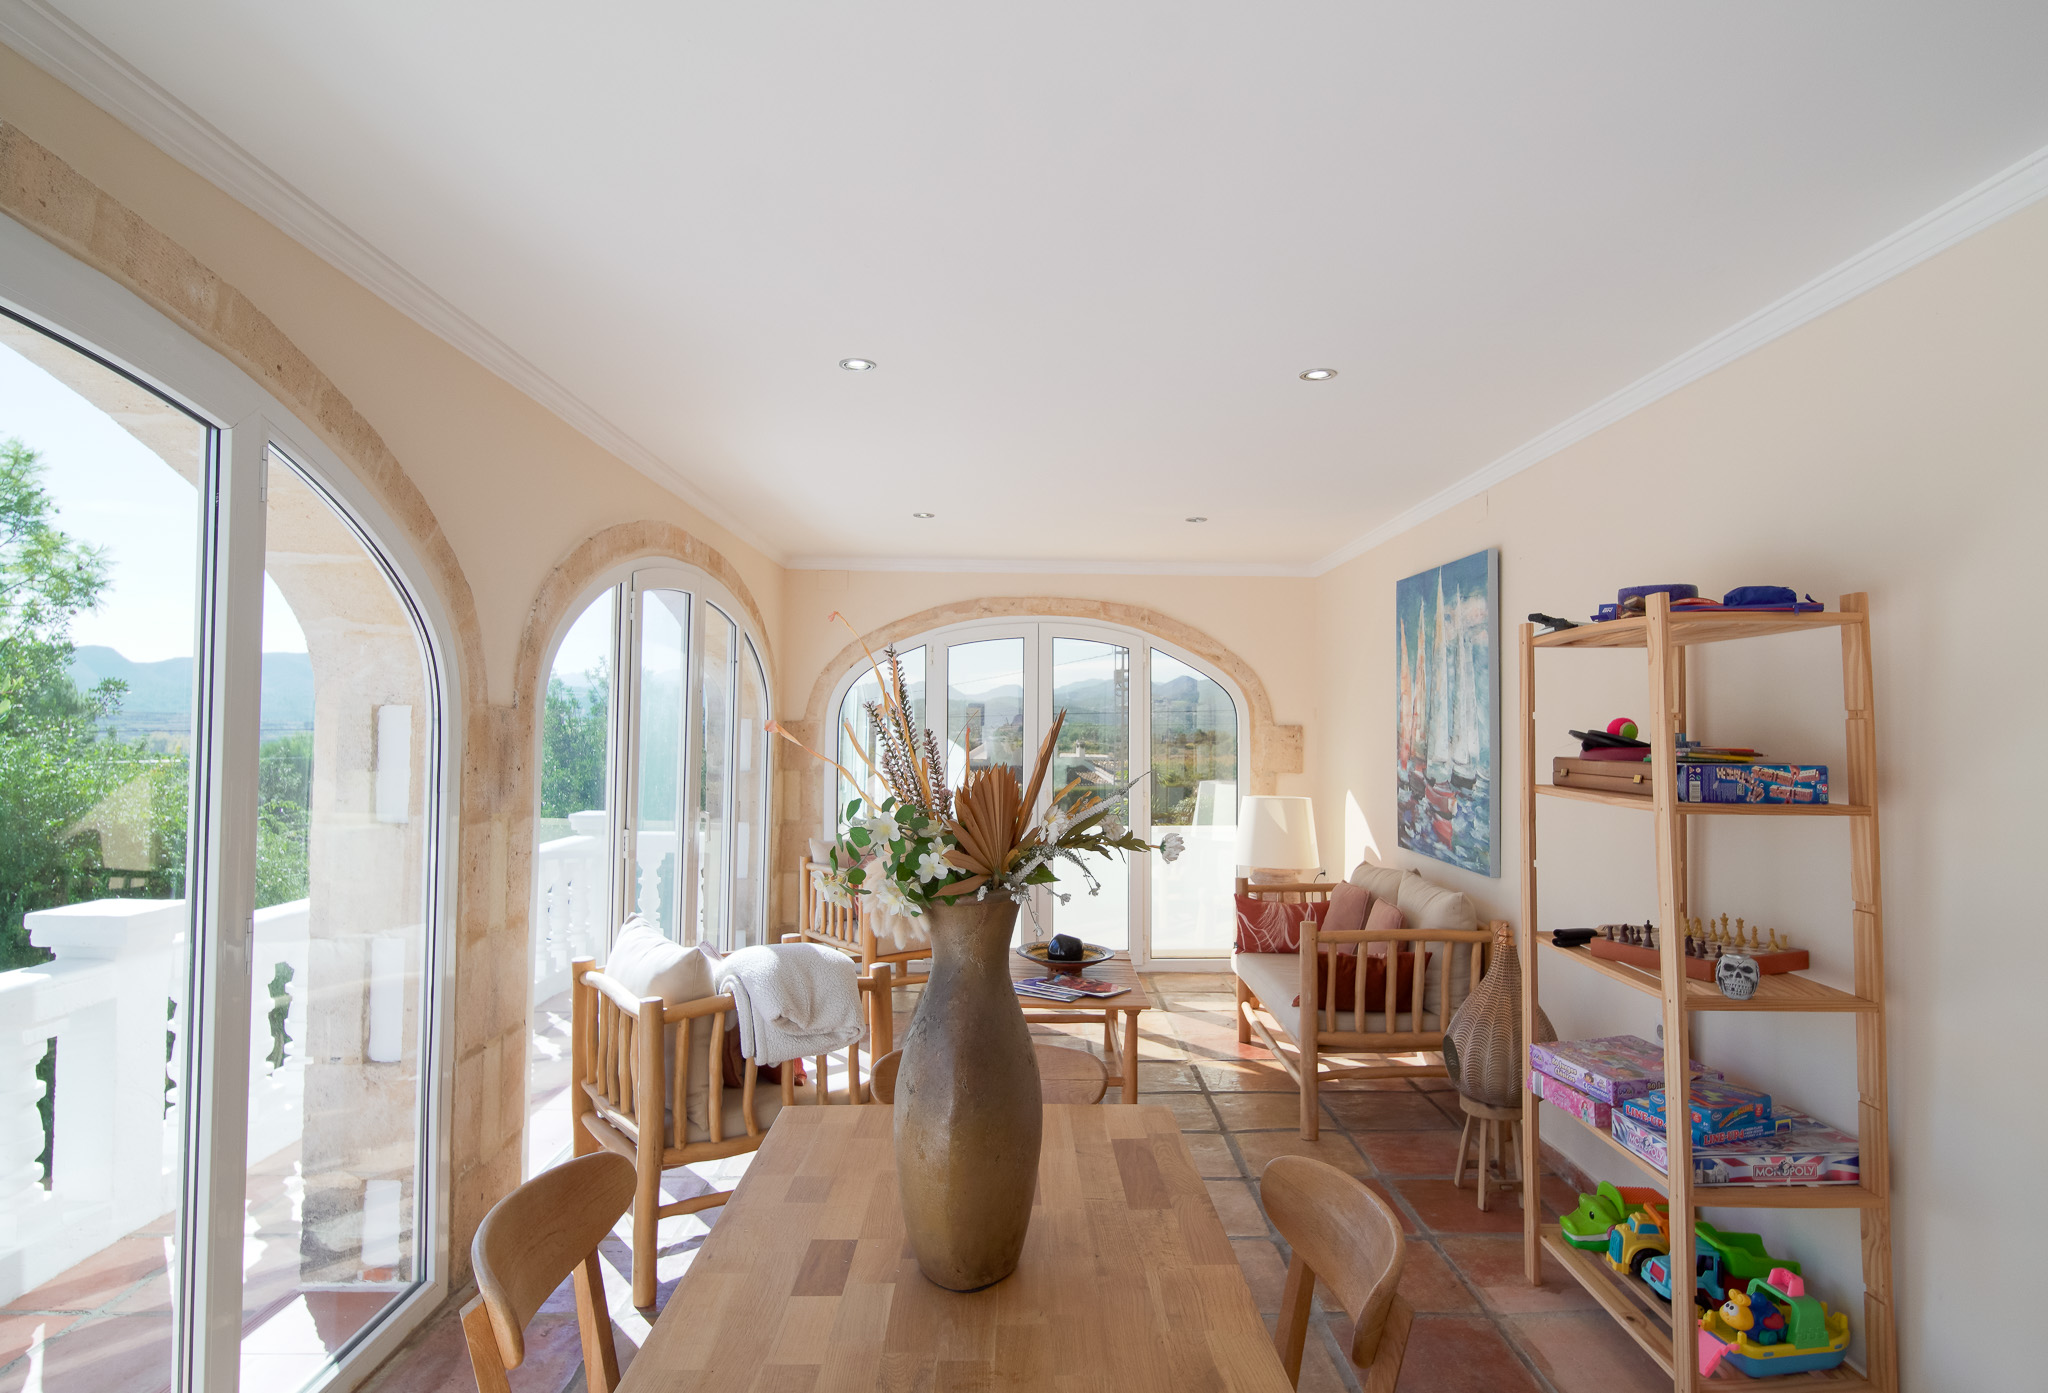 Designer Villa For Sale on Javea's Montgo